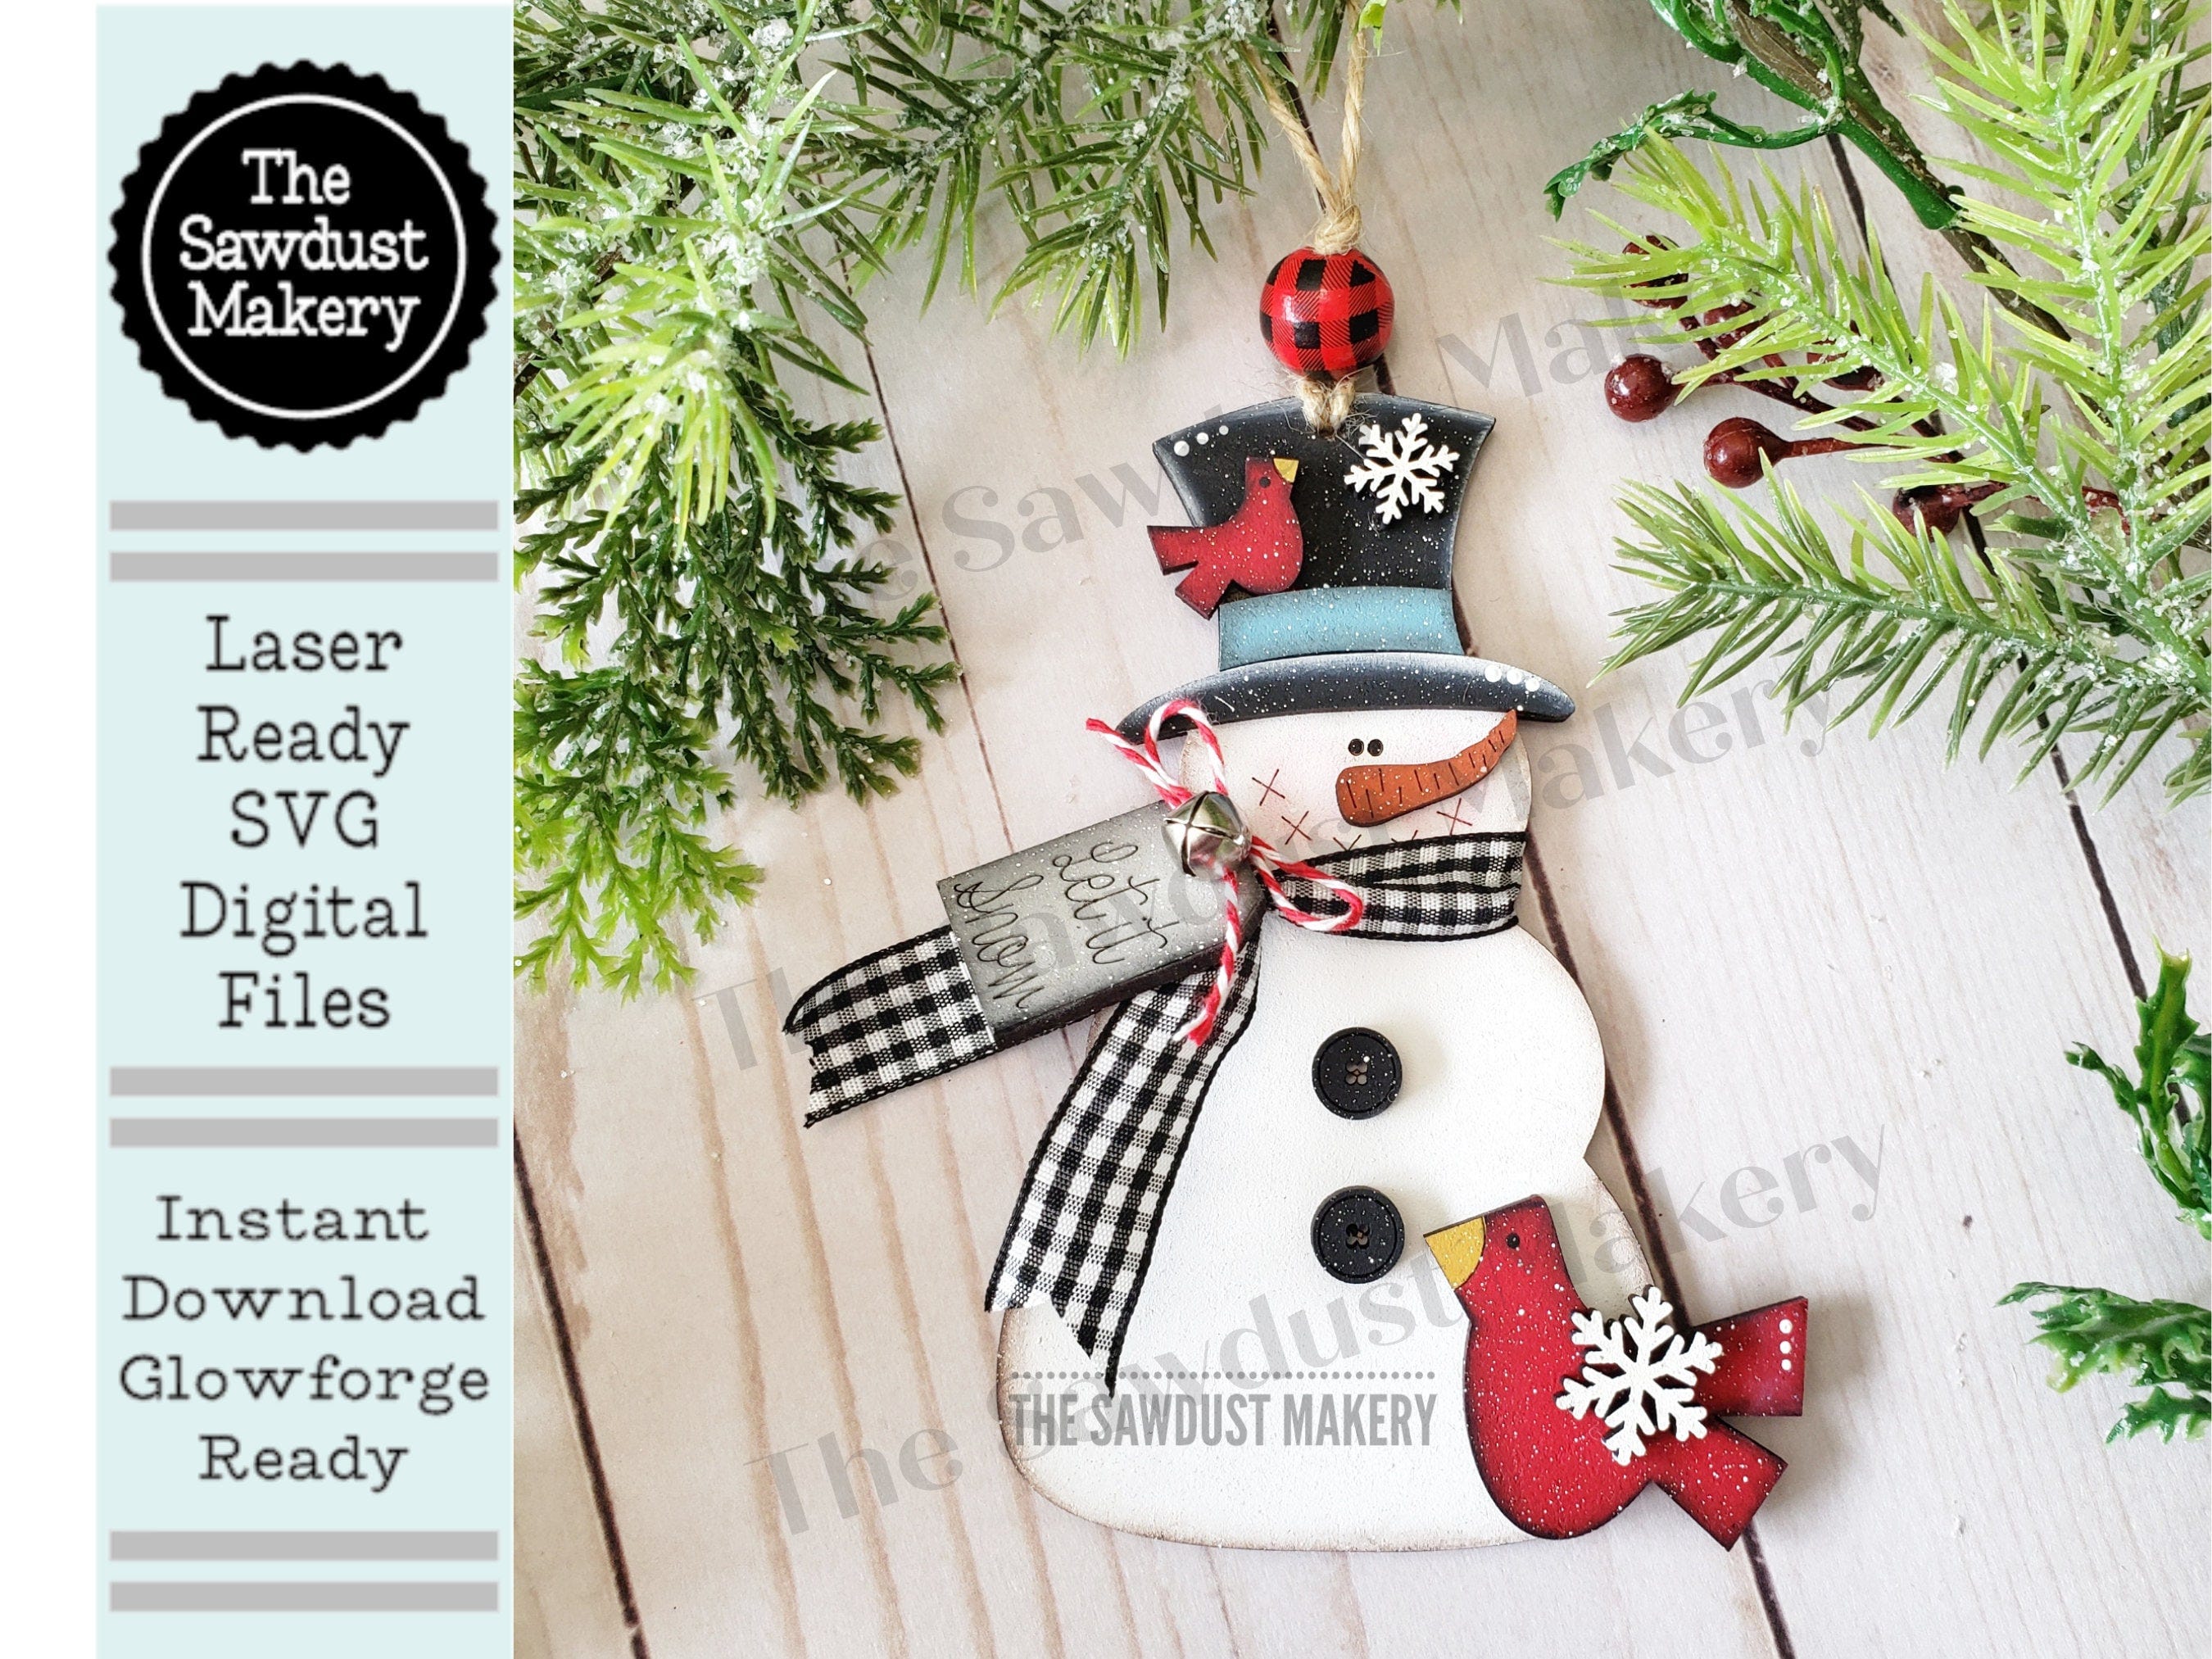 Snowbird Snowman Christmas Ornament SVG File | Laser Cut File | Christmas Tree | Ornament | Snowman Ornament svg | Christmas Ornament